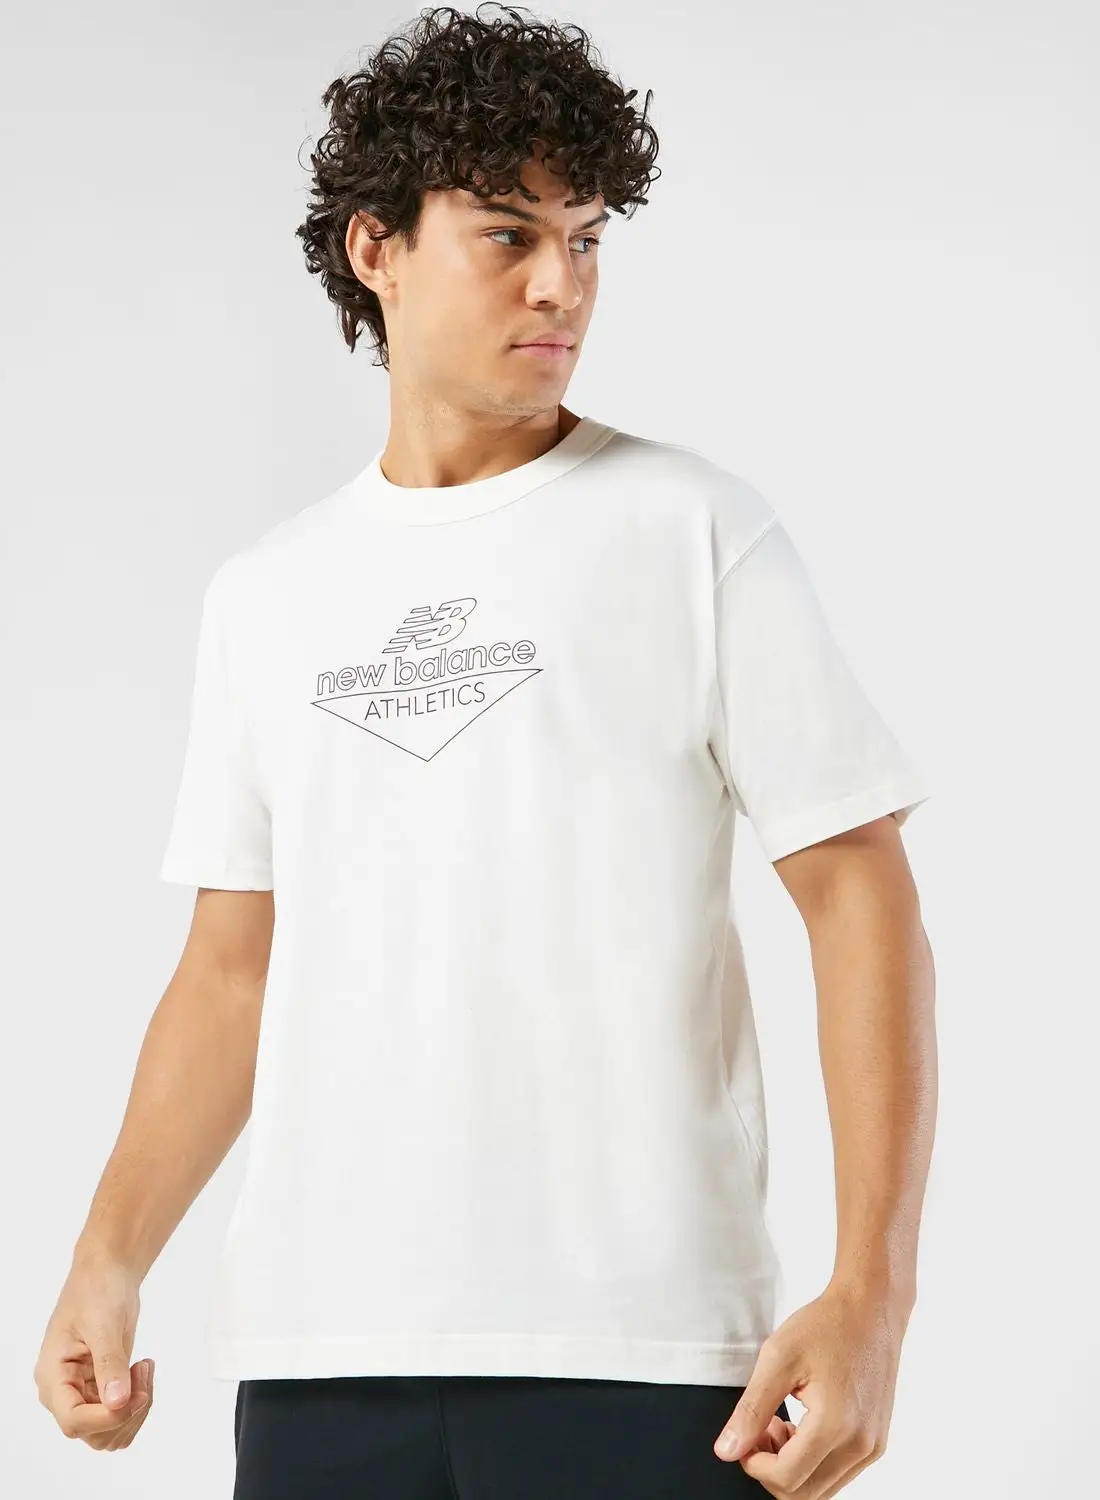 New Balance Athletics Graphic T-Shirt